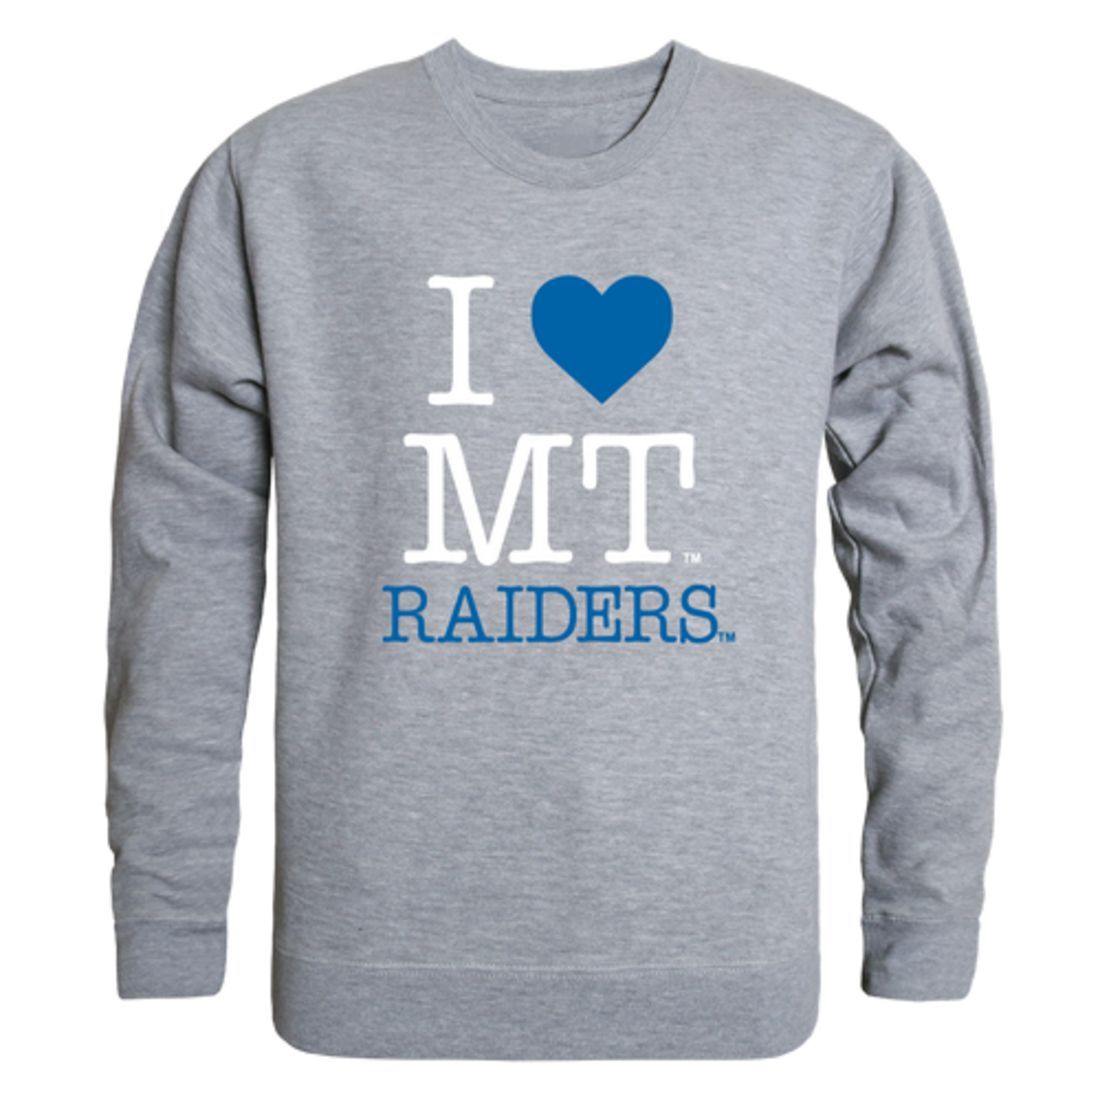 I Love MTSU Middle Tennessee State University Blue Raiders Crewneck Pullover Sweatshirt Sweater-Campus-Wardrobe